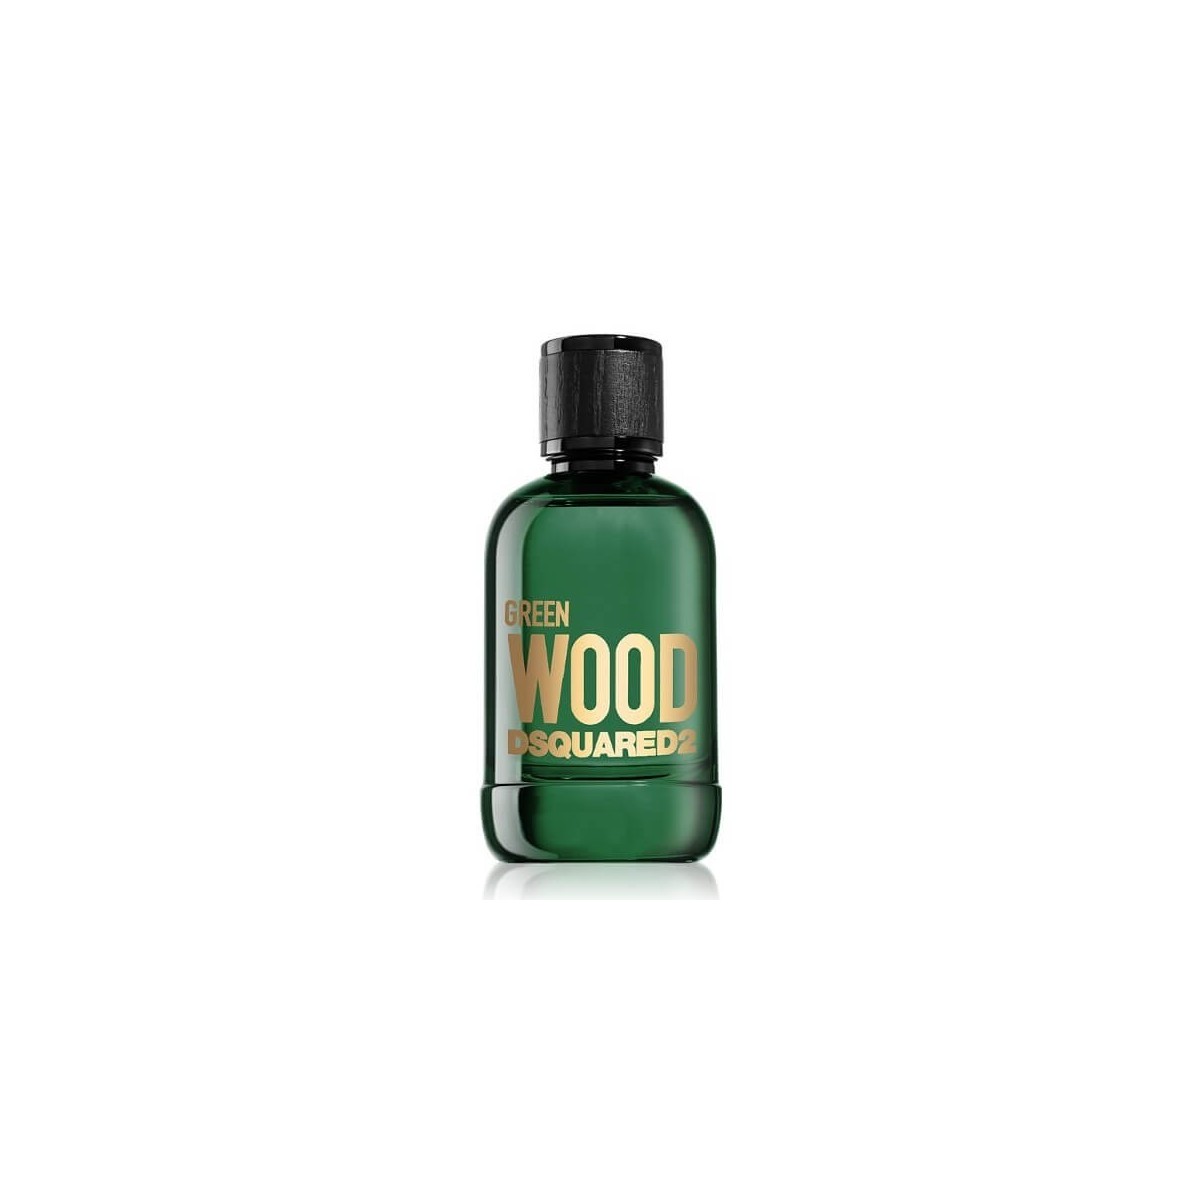 Dsquared 2 Wood Green Uomo Eau de Toilette 100ml spray